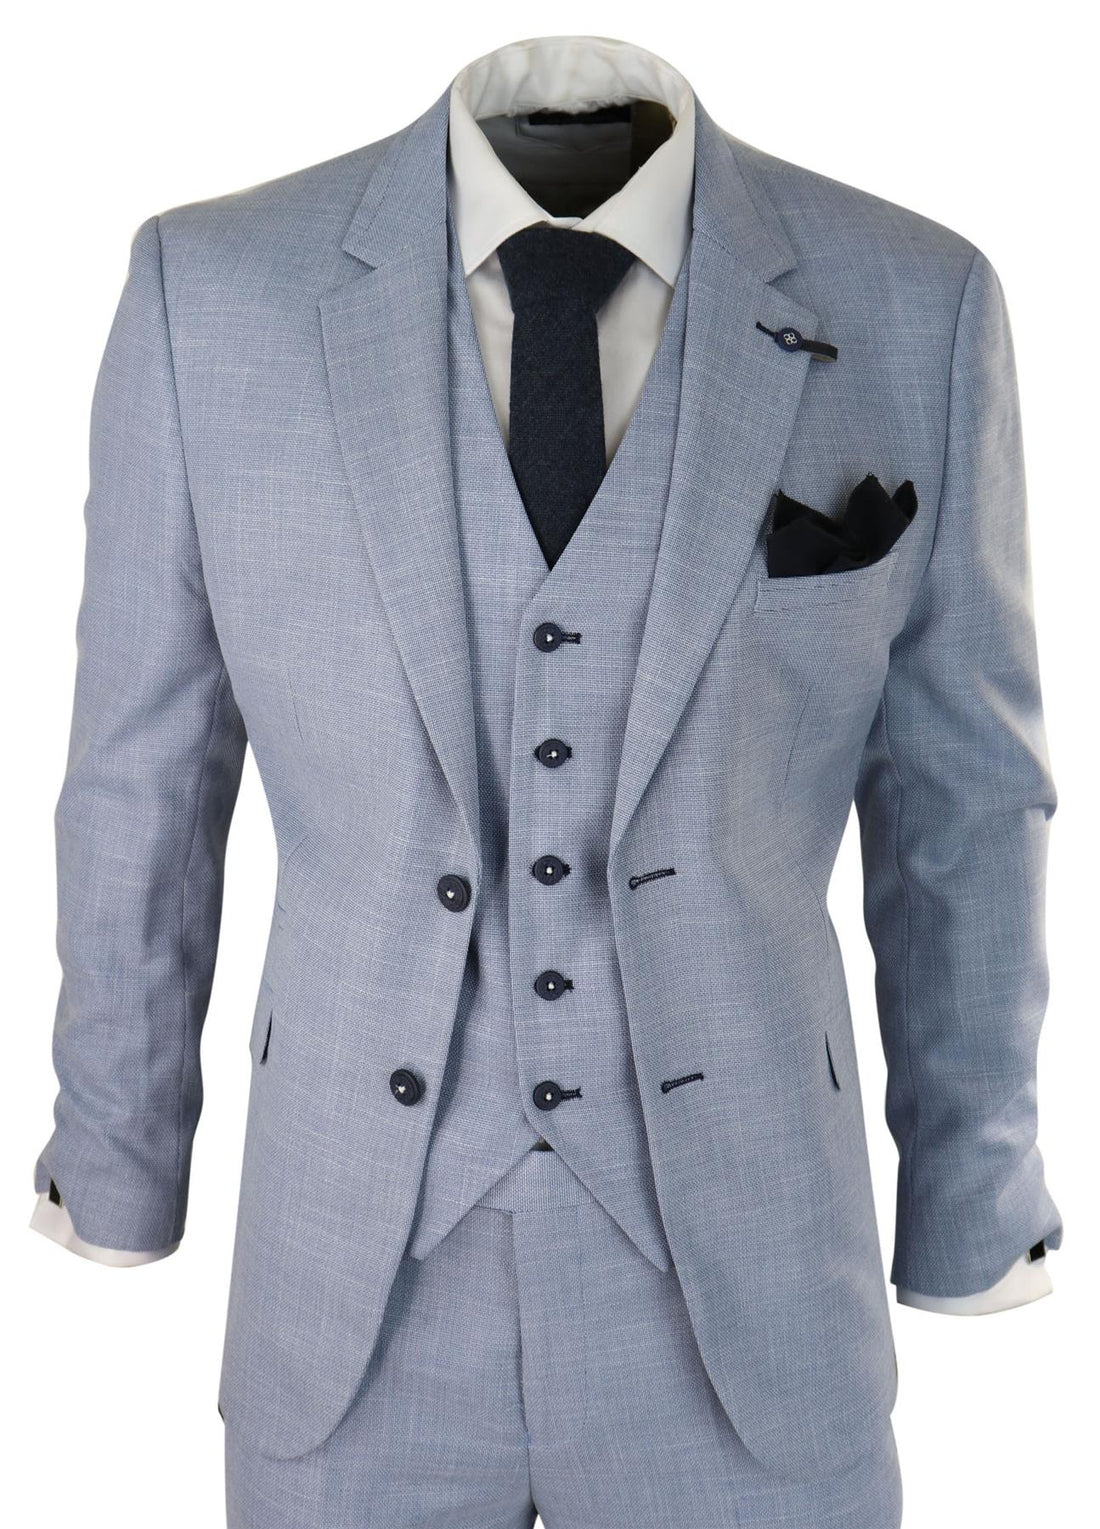 Mens 3 Piece Linen Suit Light Blue Summer Tailored Fit Wedding Prom Classic Suit - Upperclass Fashions 